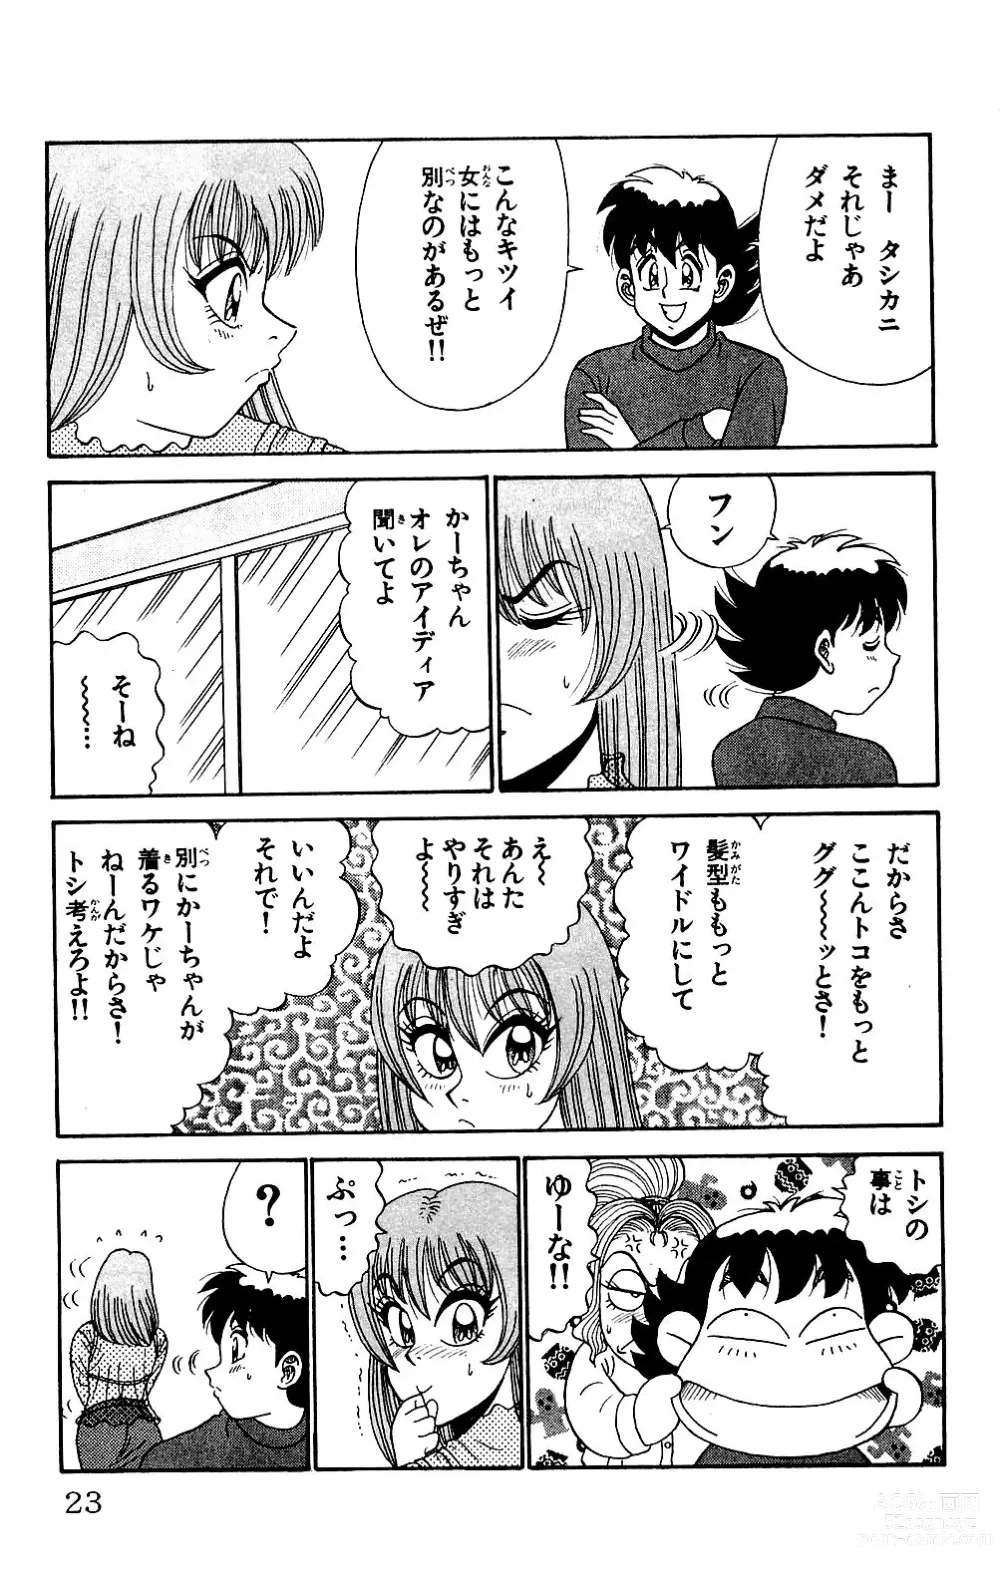 Page 21 of manga Orette Piyoritan 04